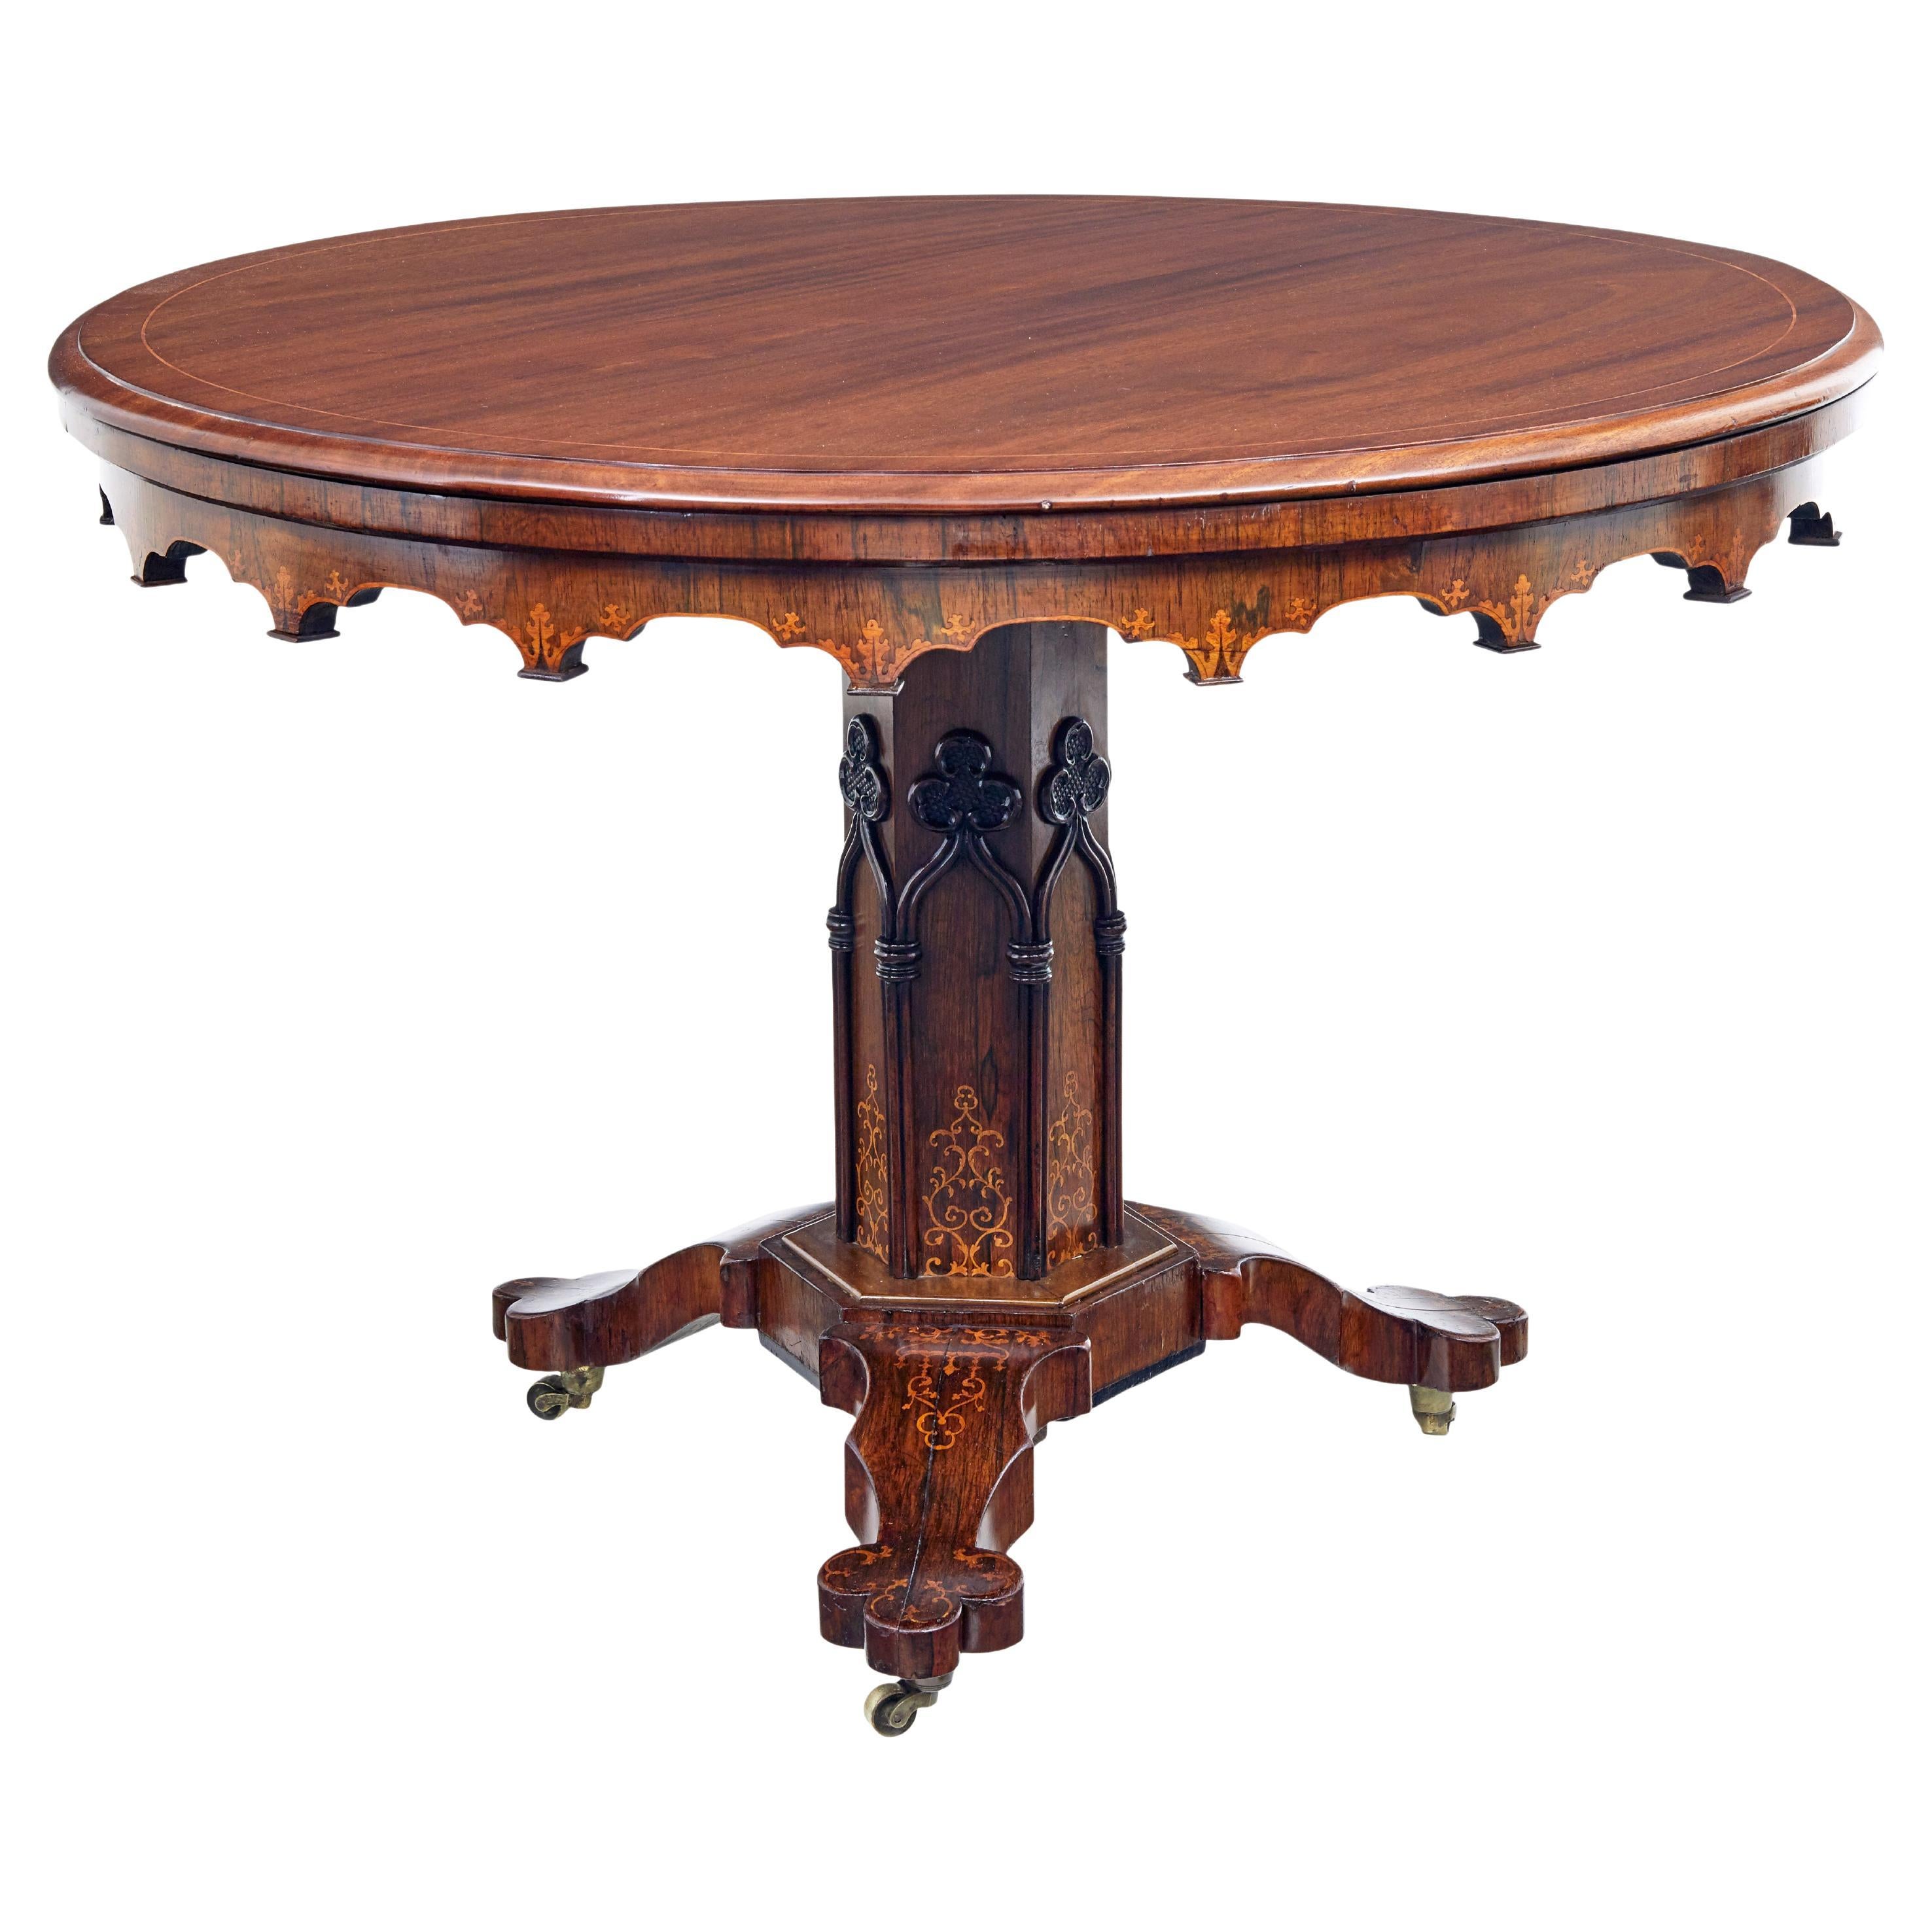 19th Century French Inlaid Mahogany Center Table